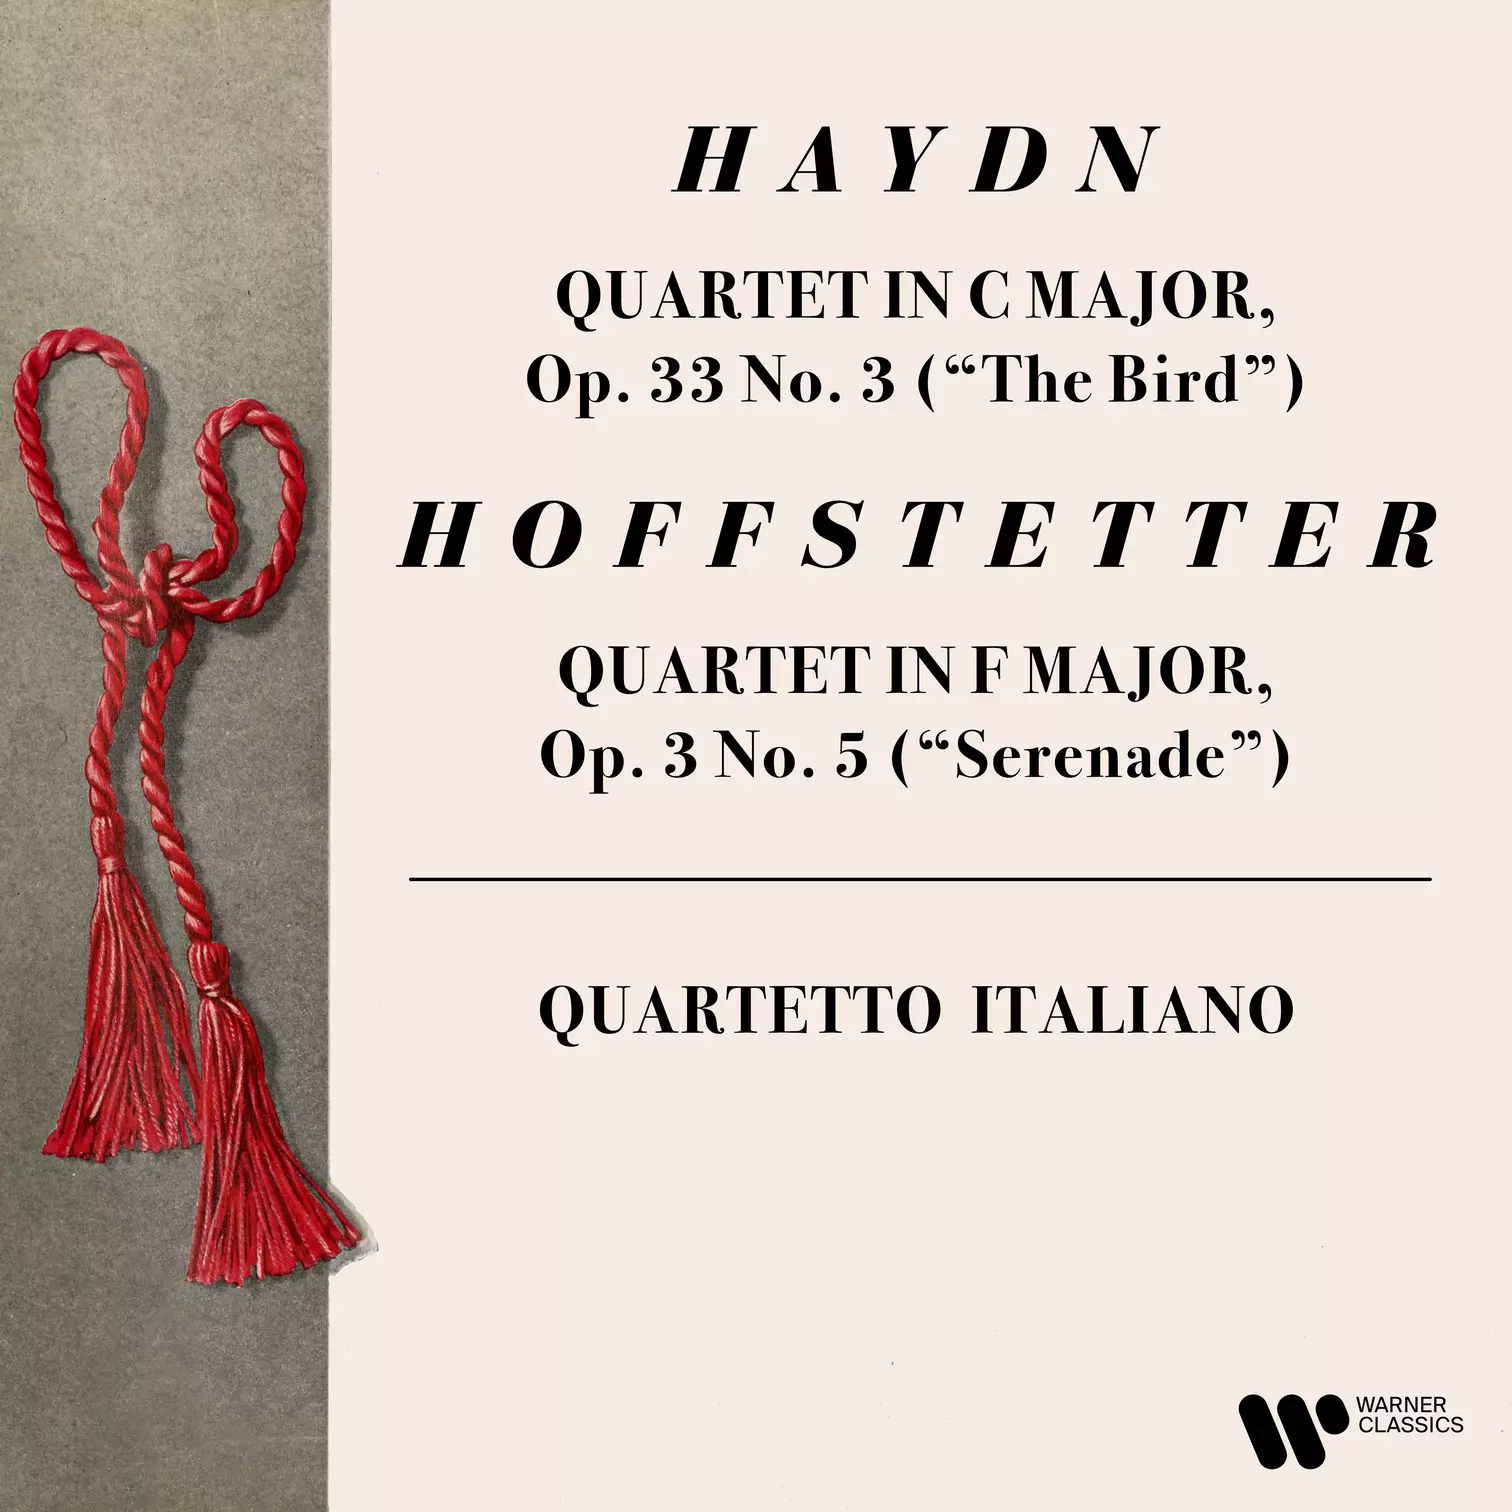 Haydn: String Quartet, Op. 33 No. 3 “The Bird” - Hoffstetter: String Quartet “Serenade”